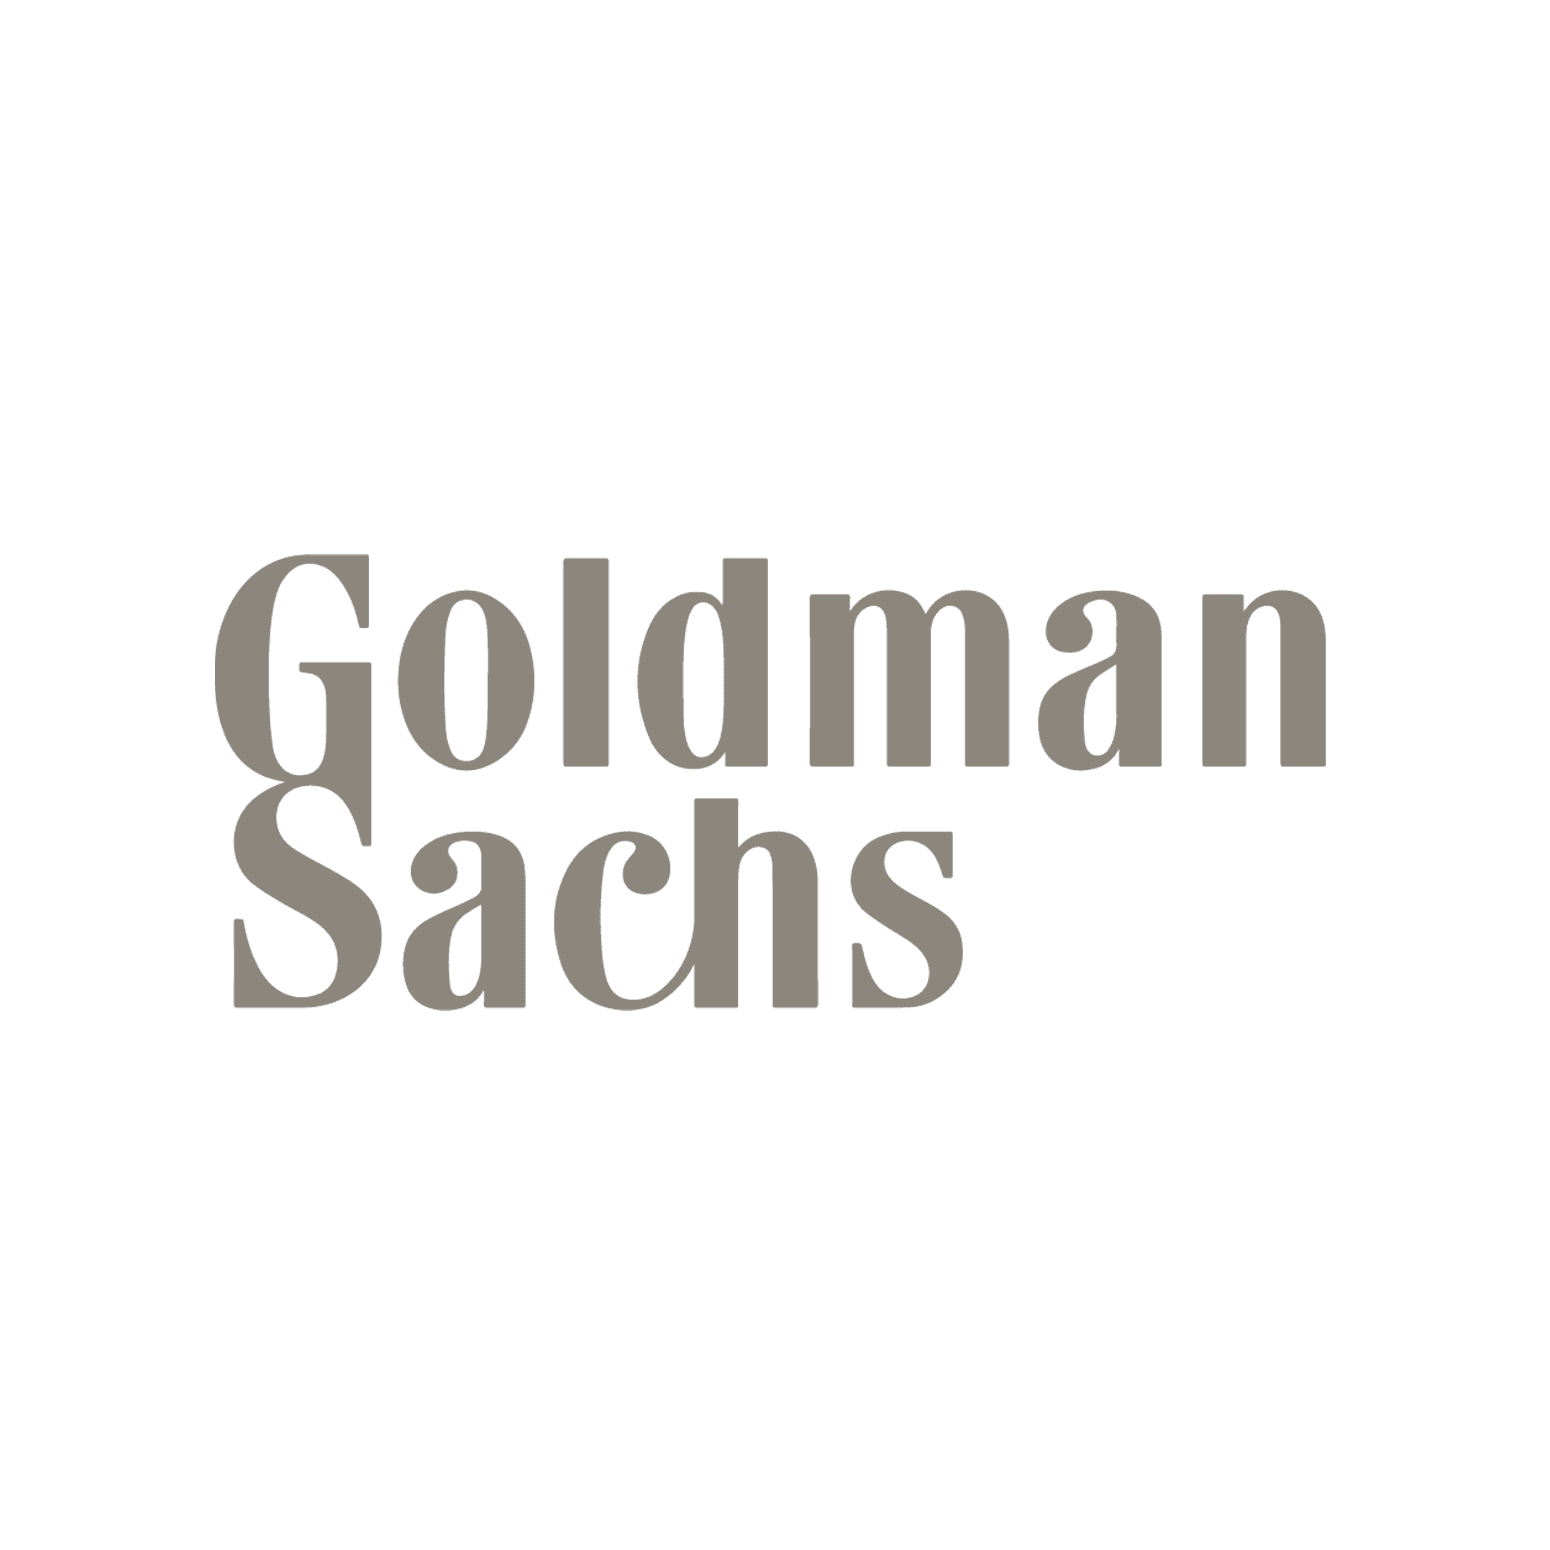 Goldman_Sachs_logo_PNG7.png